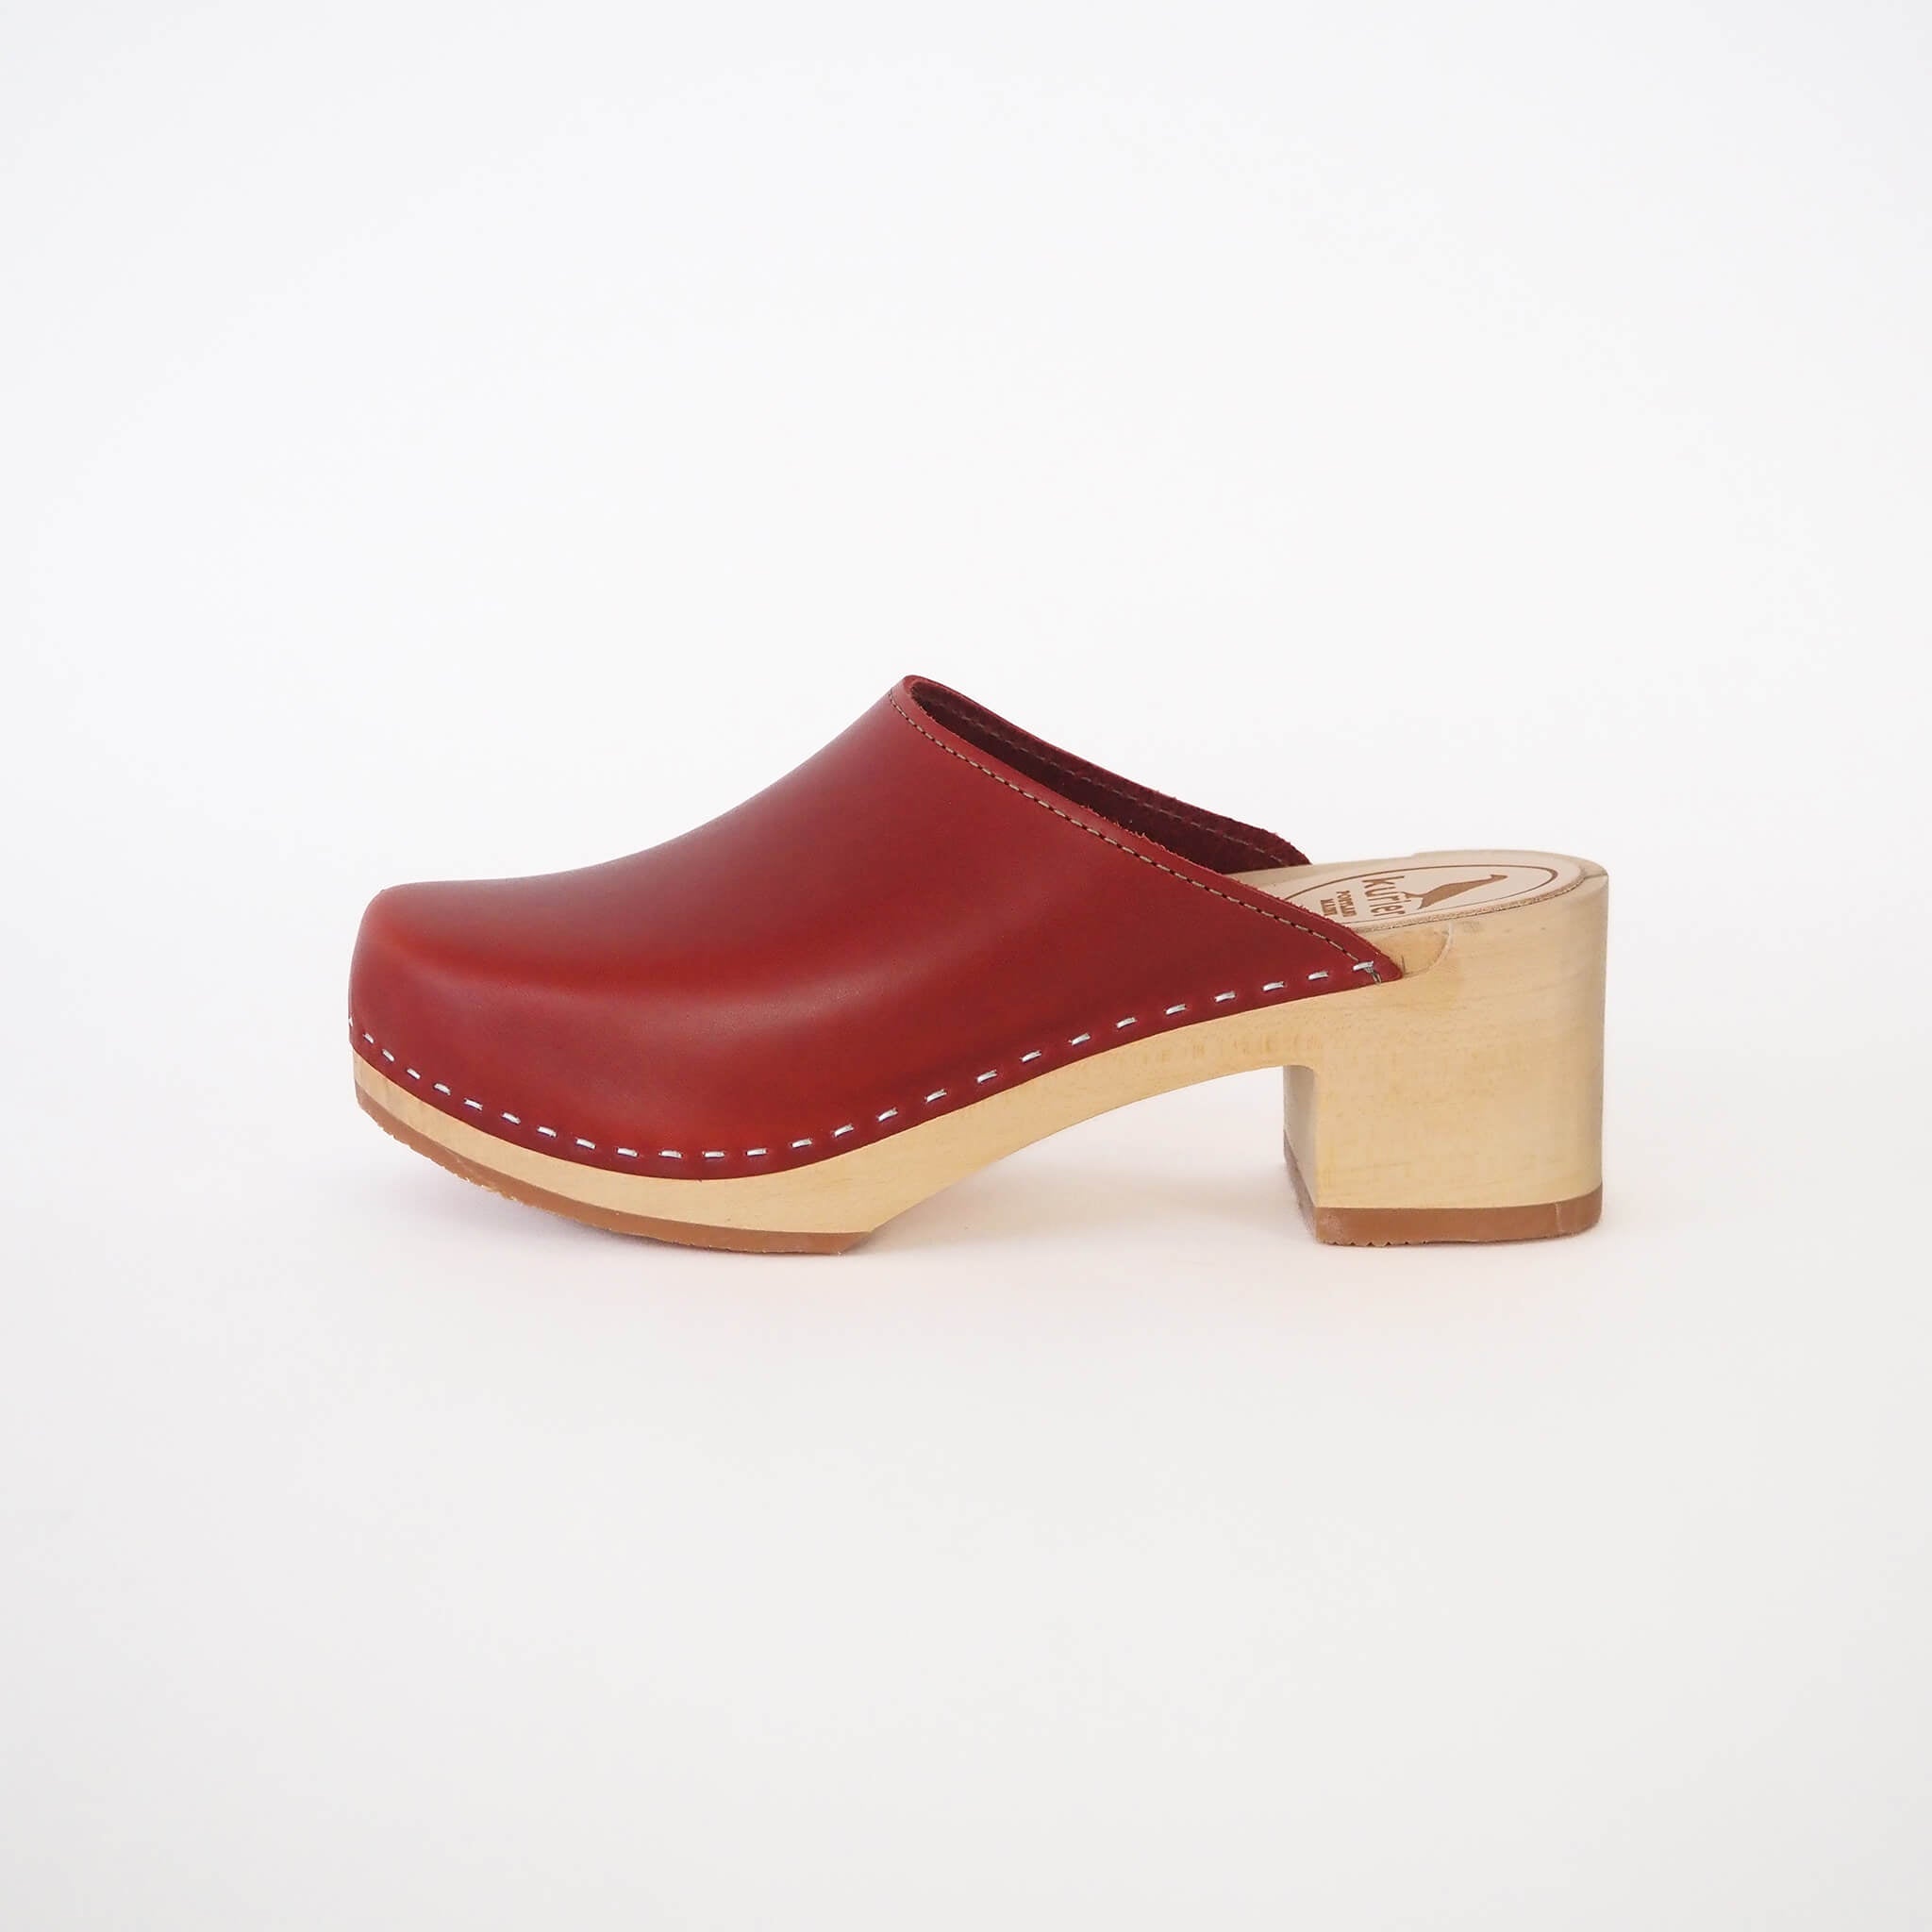 pepper clog high heel closed toe mule handmade american leather wood - cherry side view